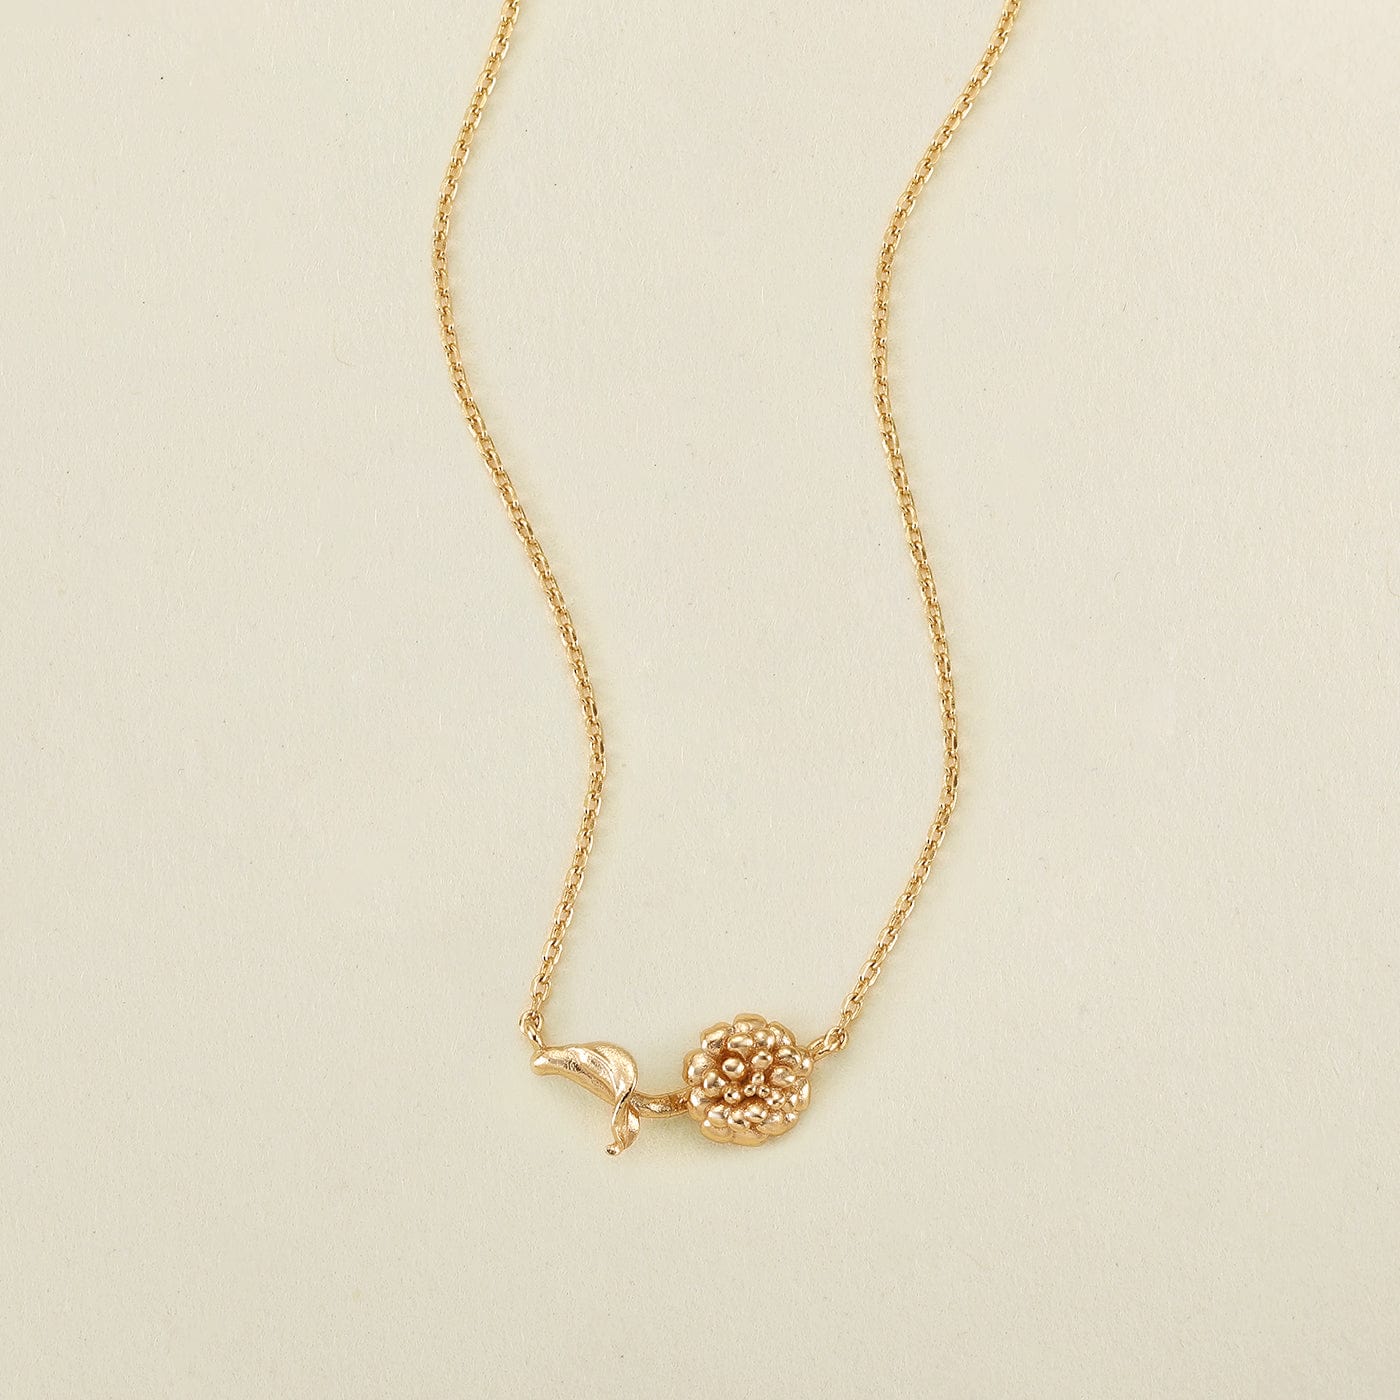 October Everbloom Birth Flower Necklace Gold Vermeil Necklace